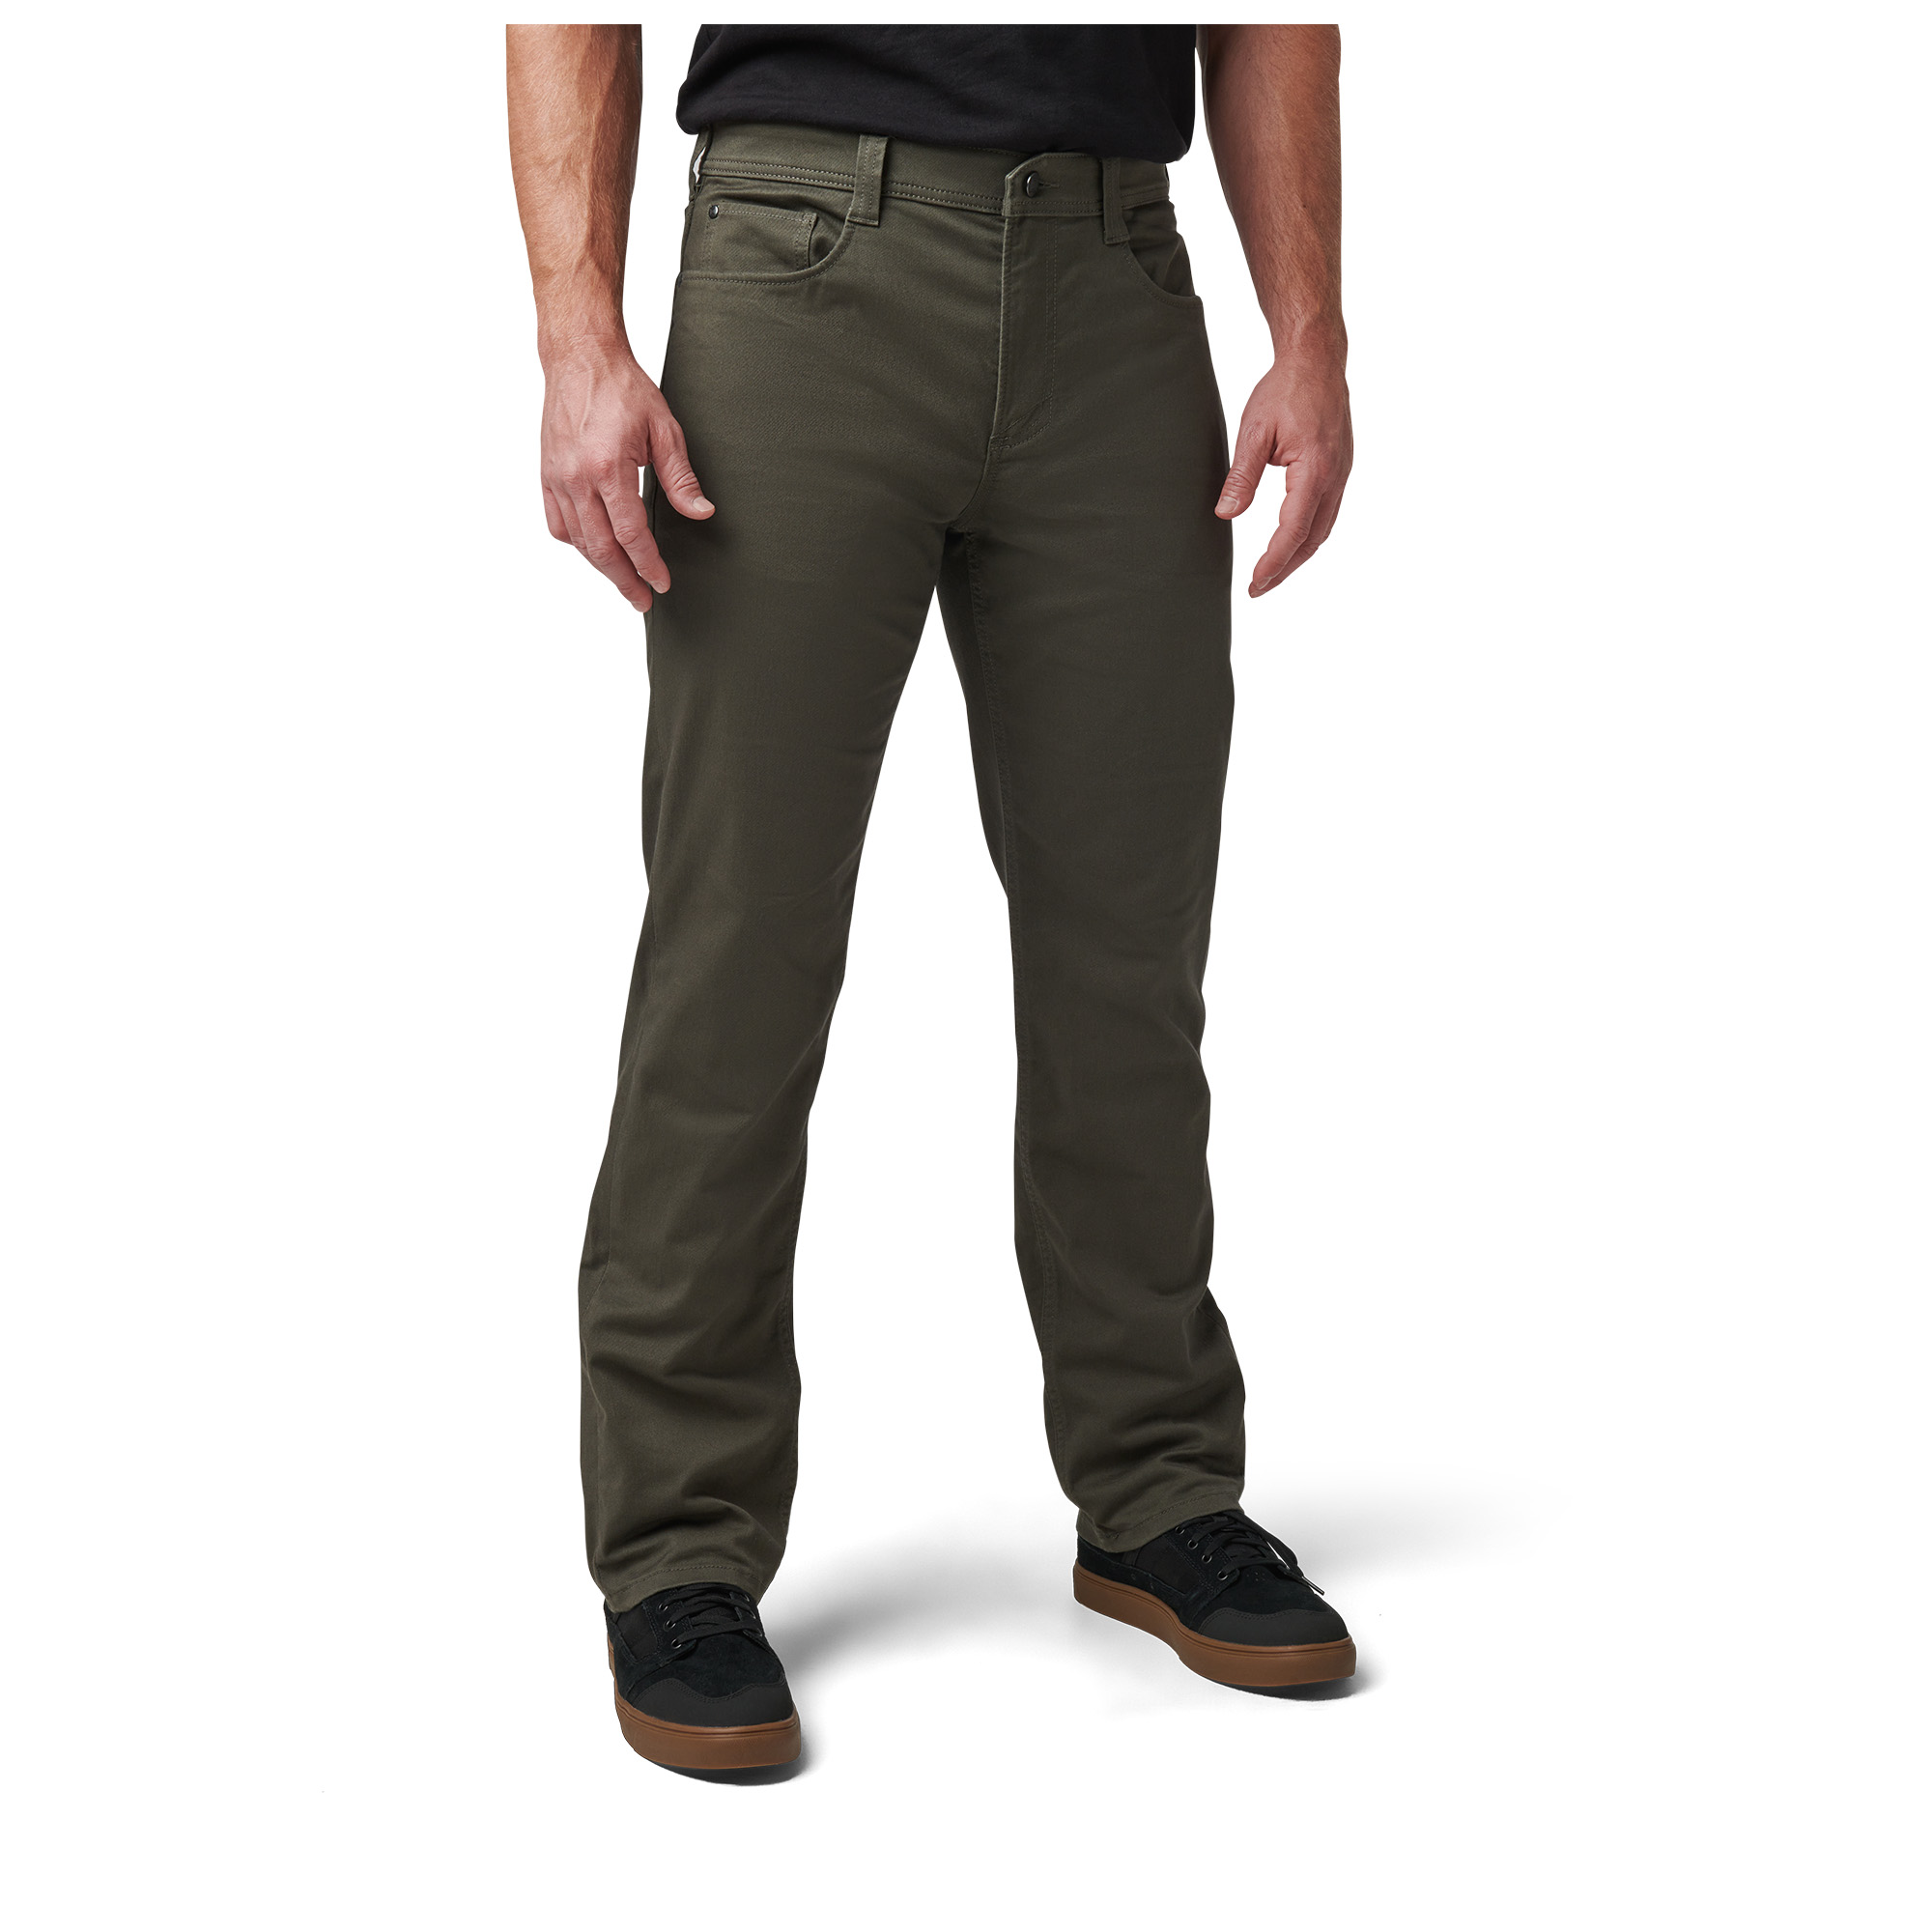 Defender-flex pant 2.0 - Pants & shorts